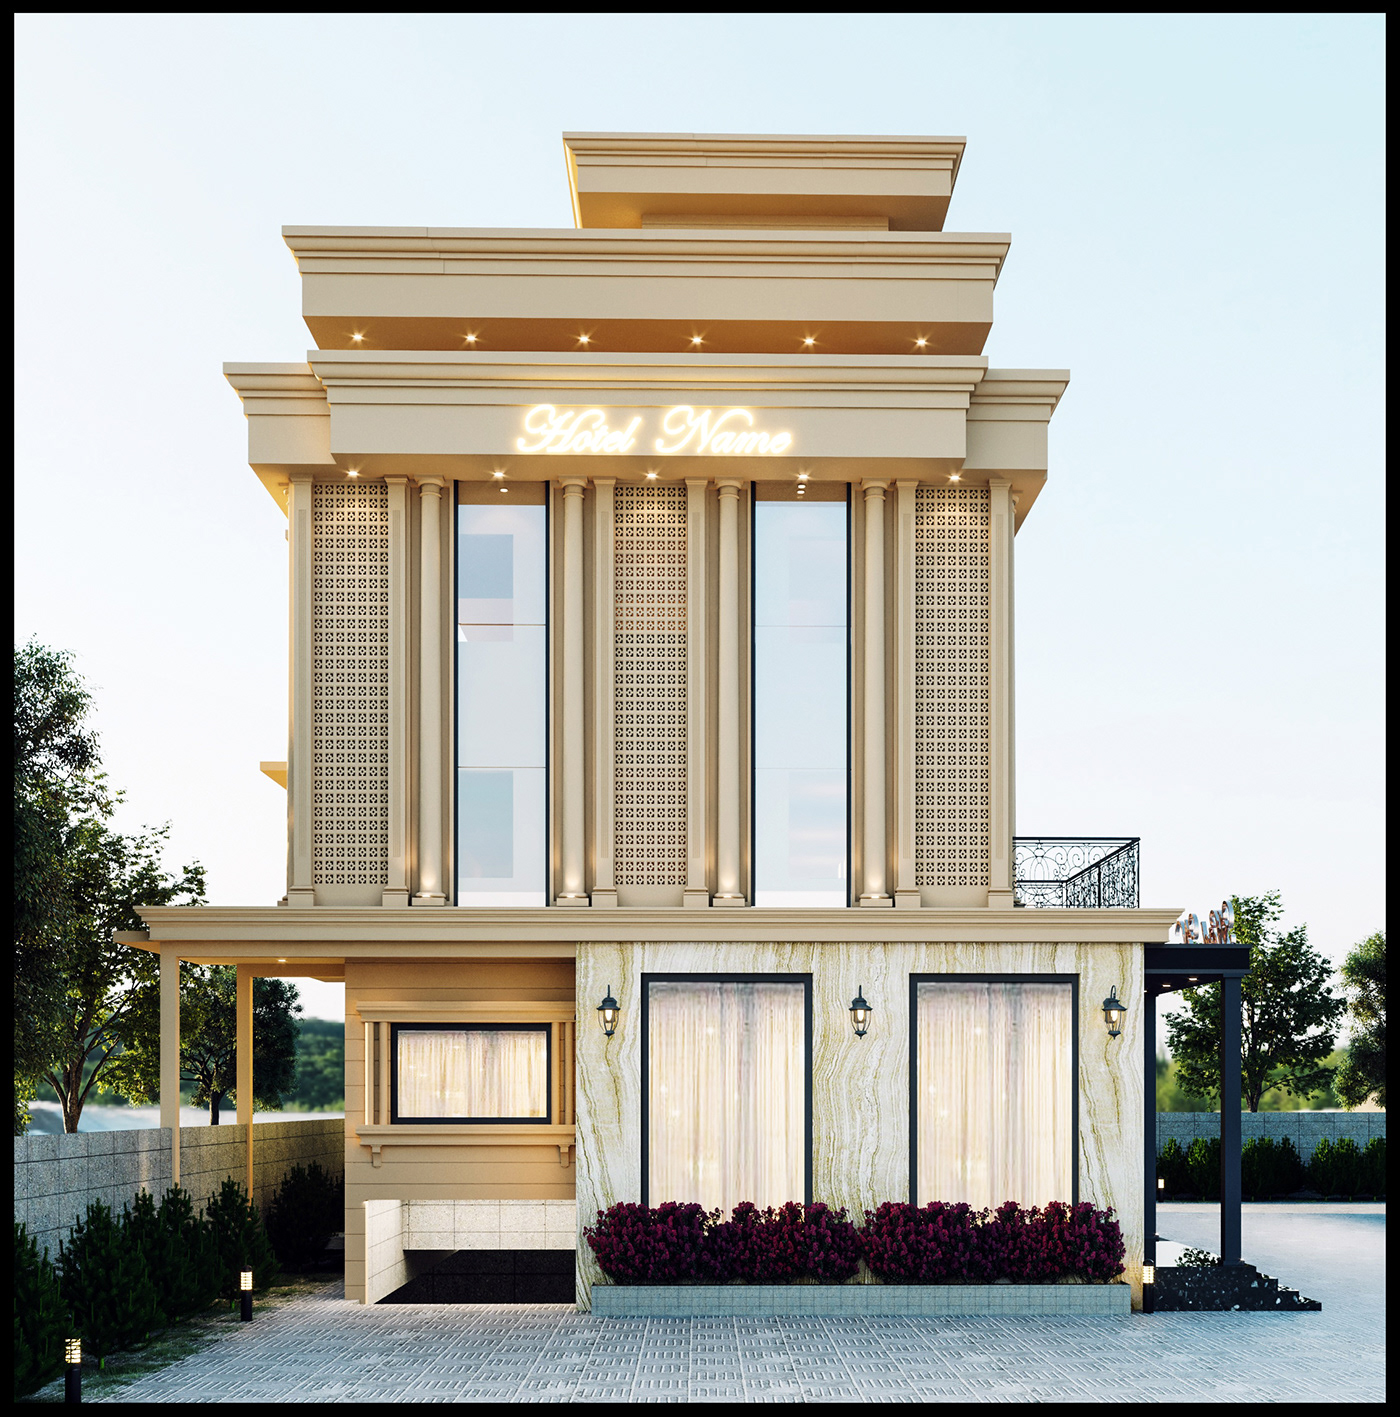 3ds max architecture exterior hotel design mininal Render visualization